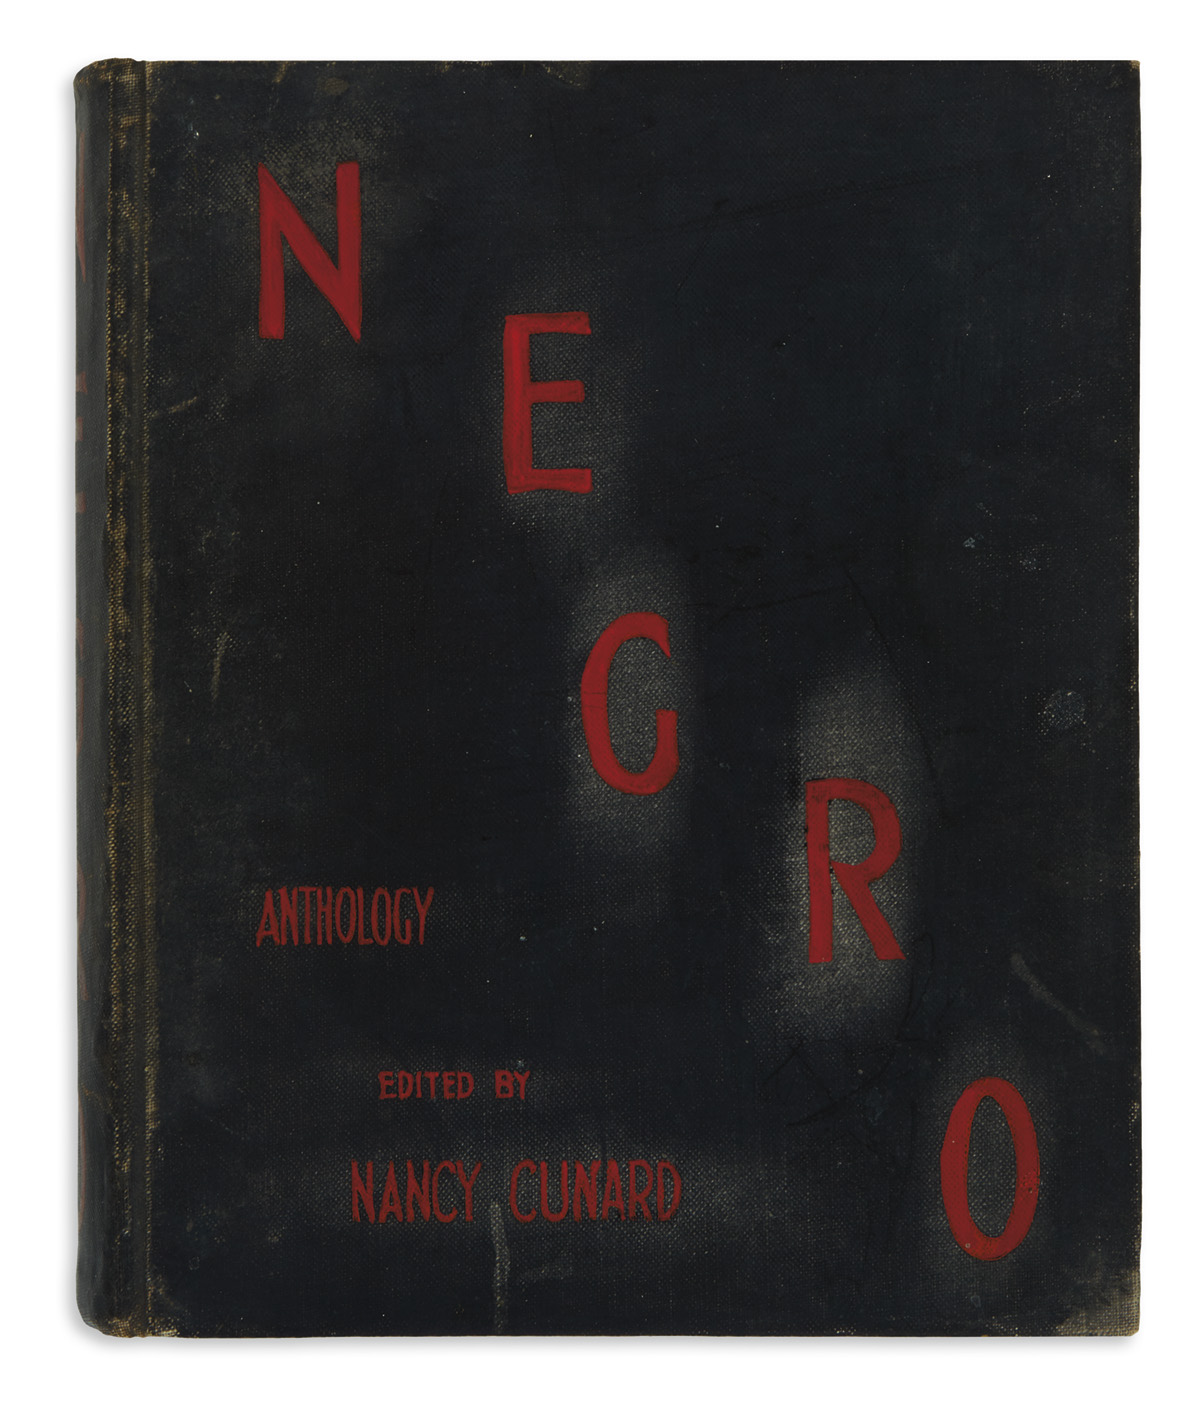 (LITERATURE.) Cunard, Nancy; editor. Negro Anthology, Made by Nancy Cunard, 1931-1933.